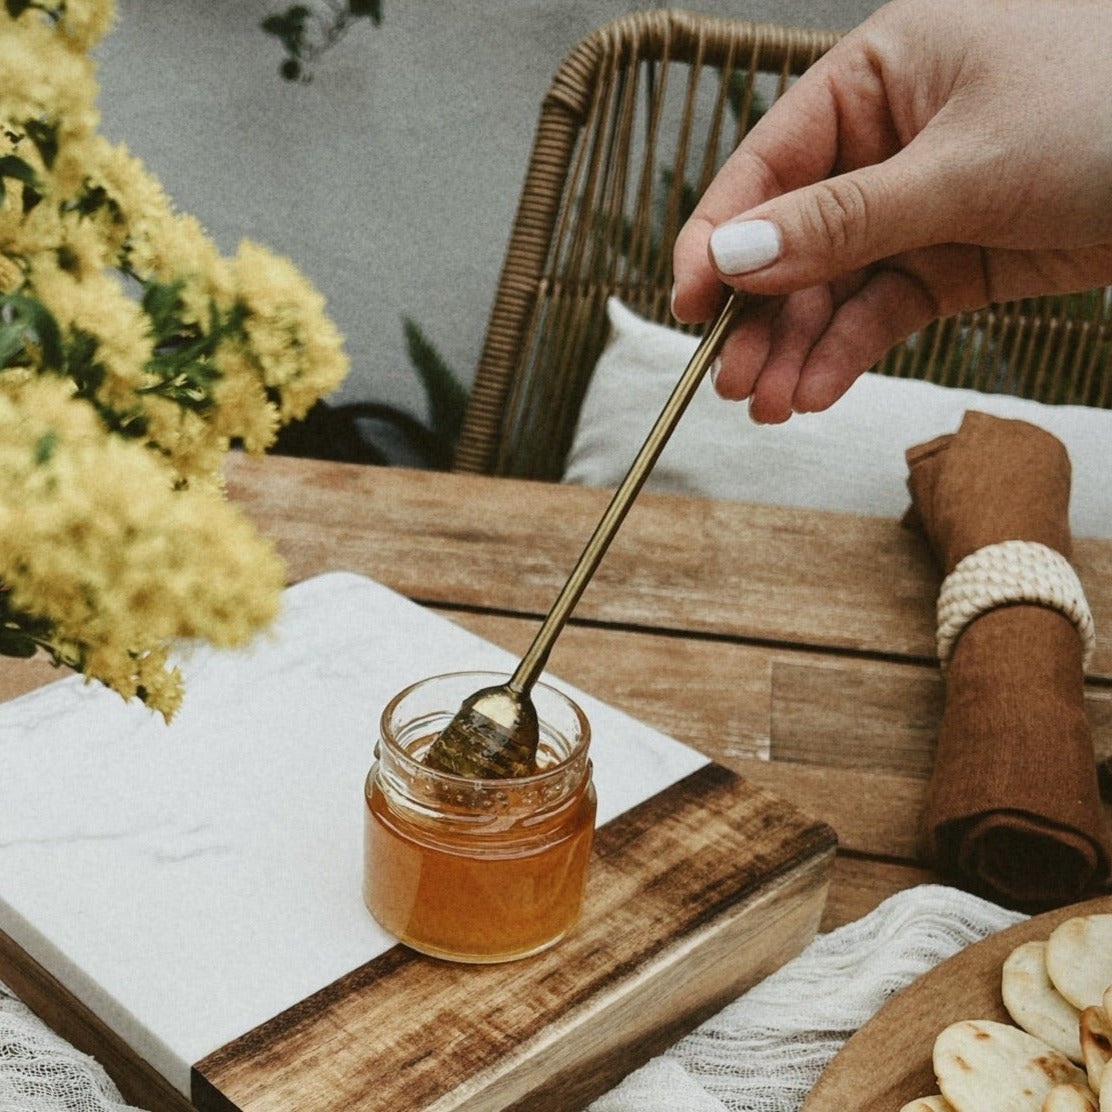 Honey dipper in honey pot on tablescape.